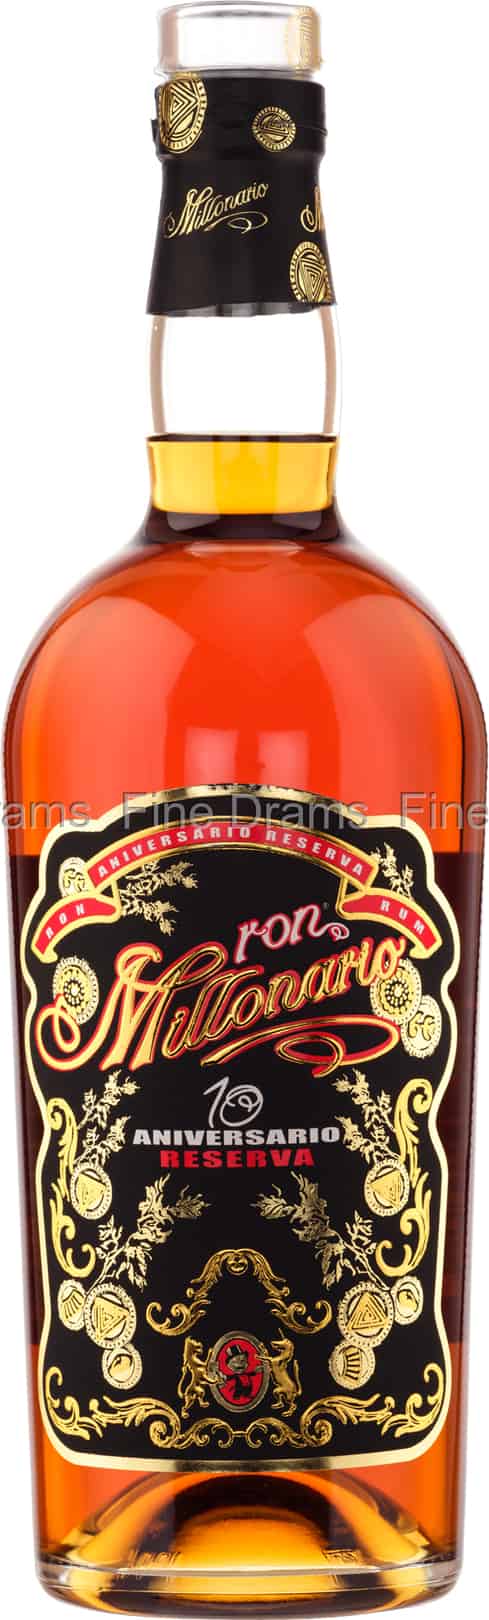 Ron Millonario XO - Dark rum